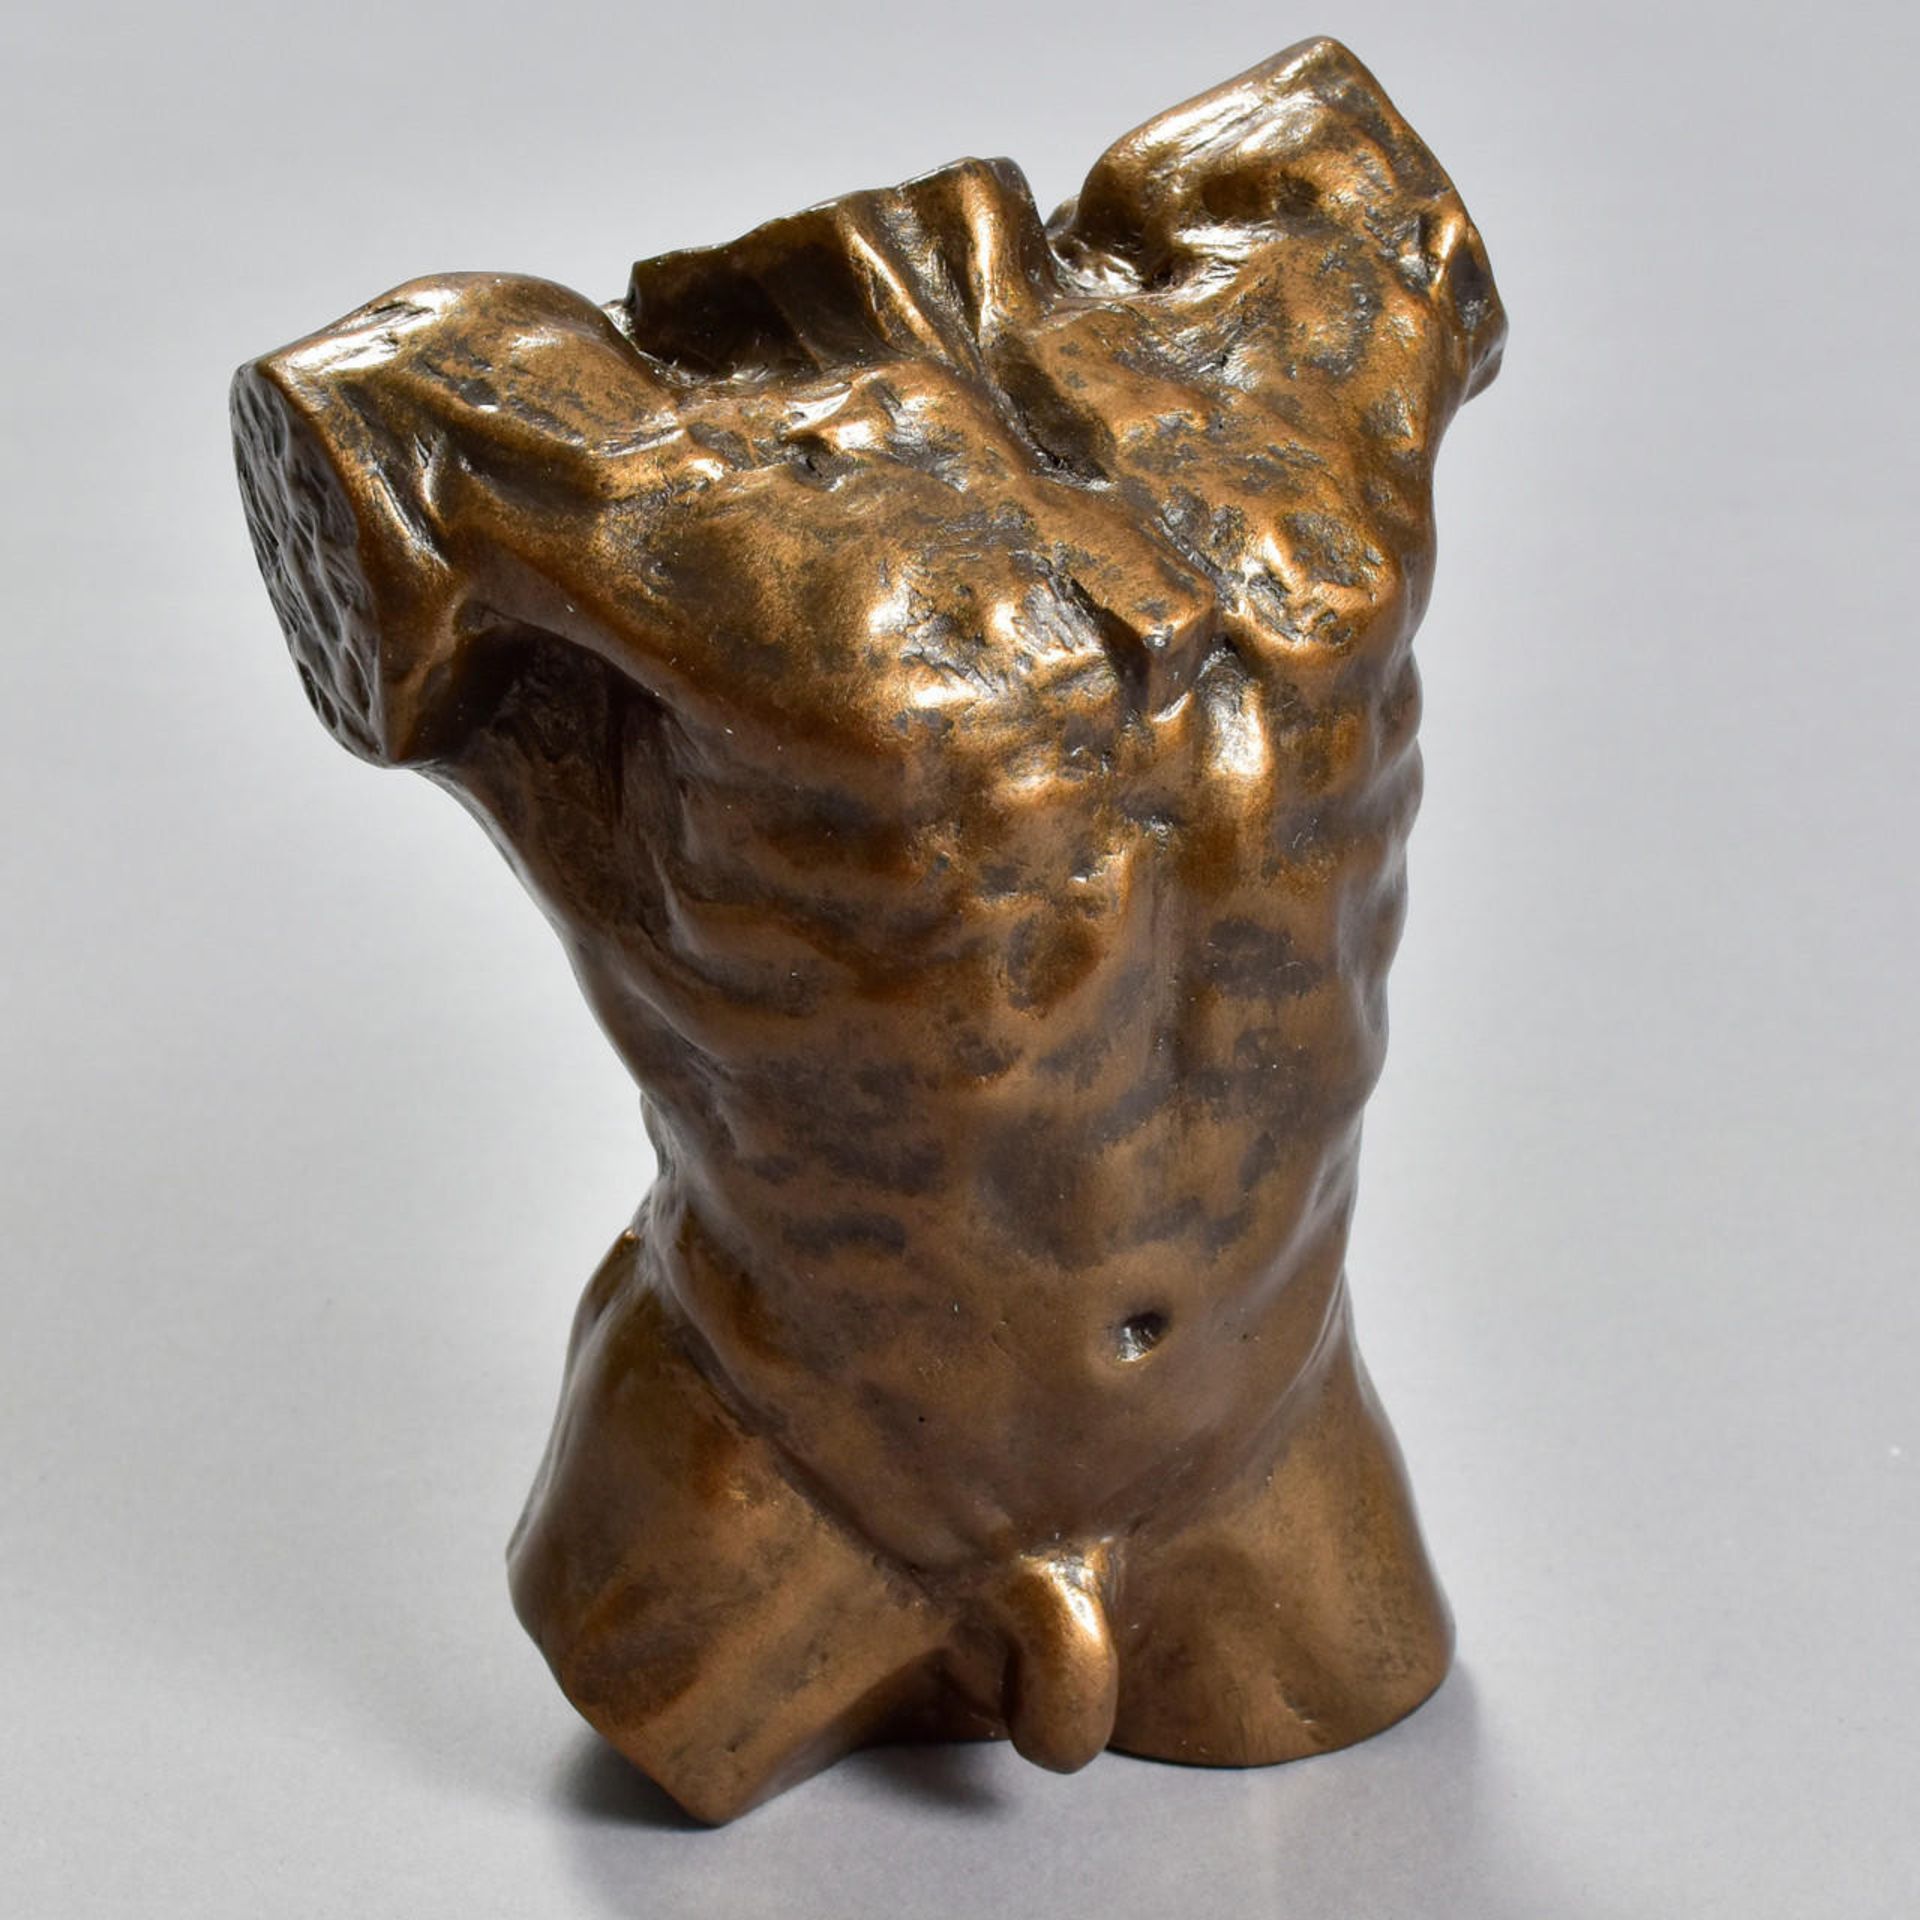 Auguste Rodin "Torso" Sculpture - Image 3 of 3